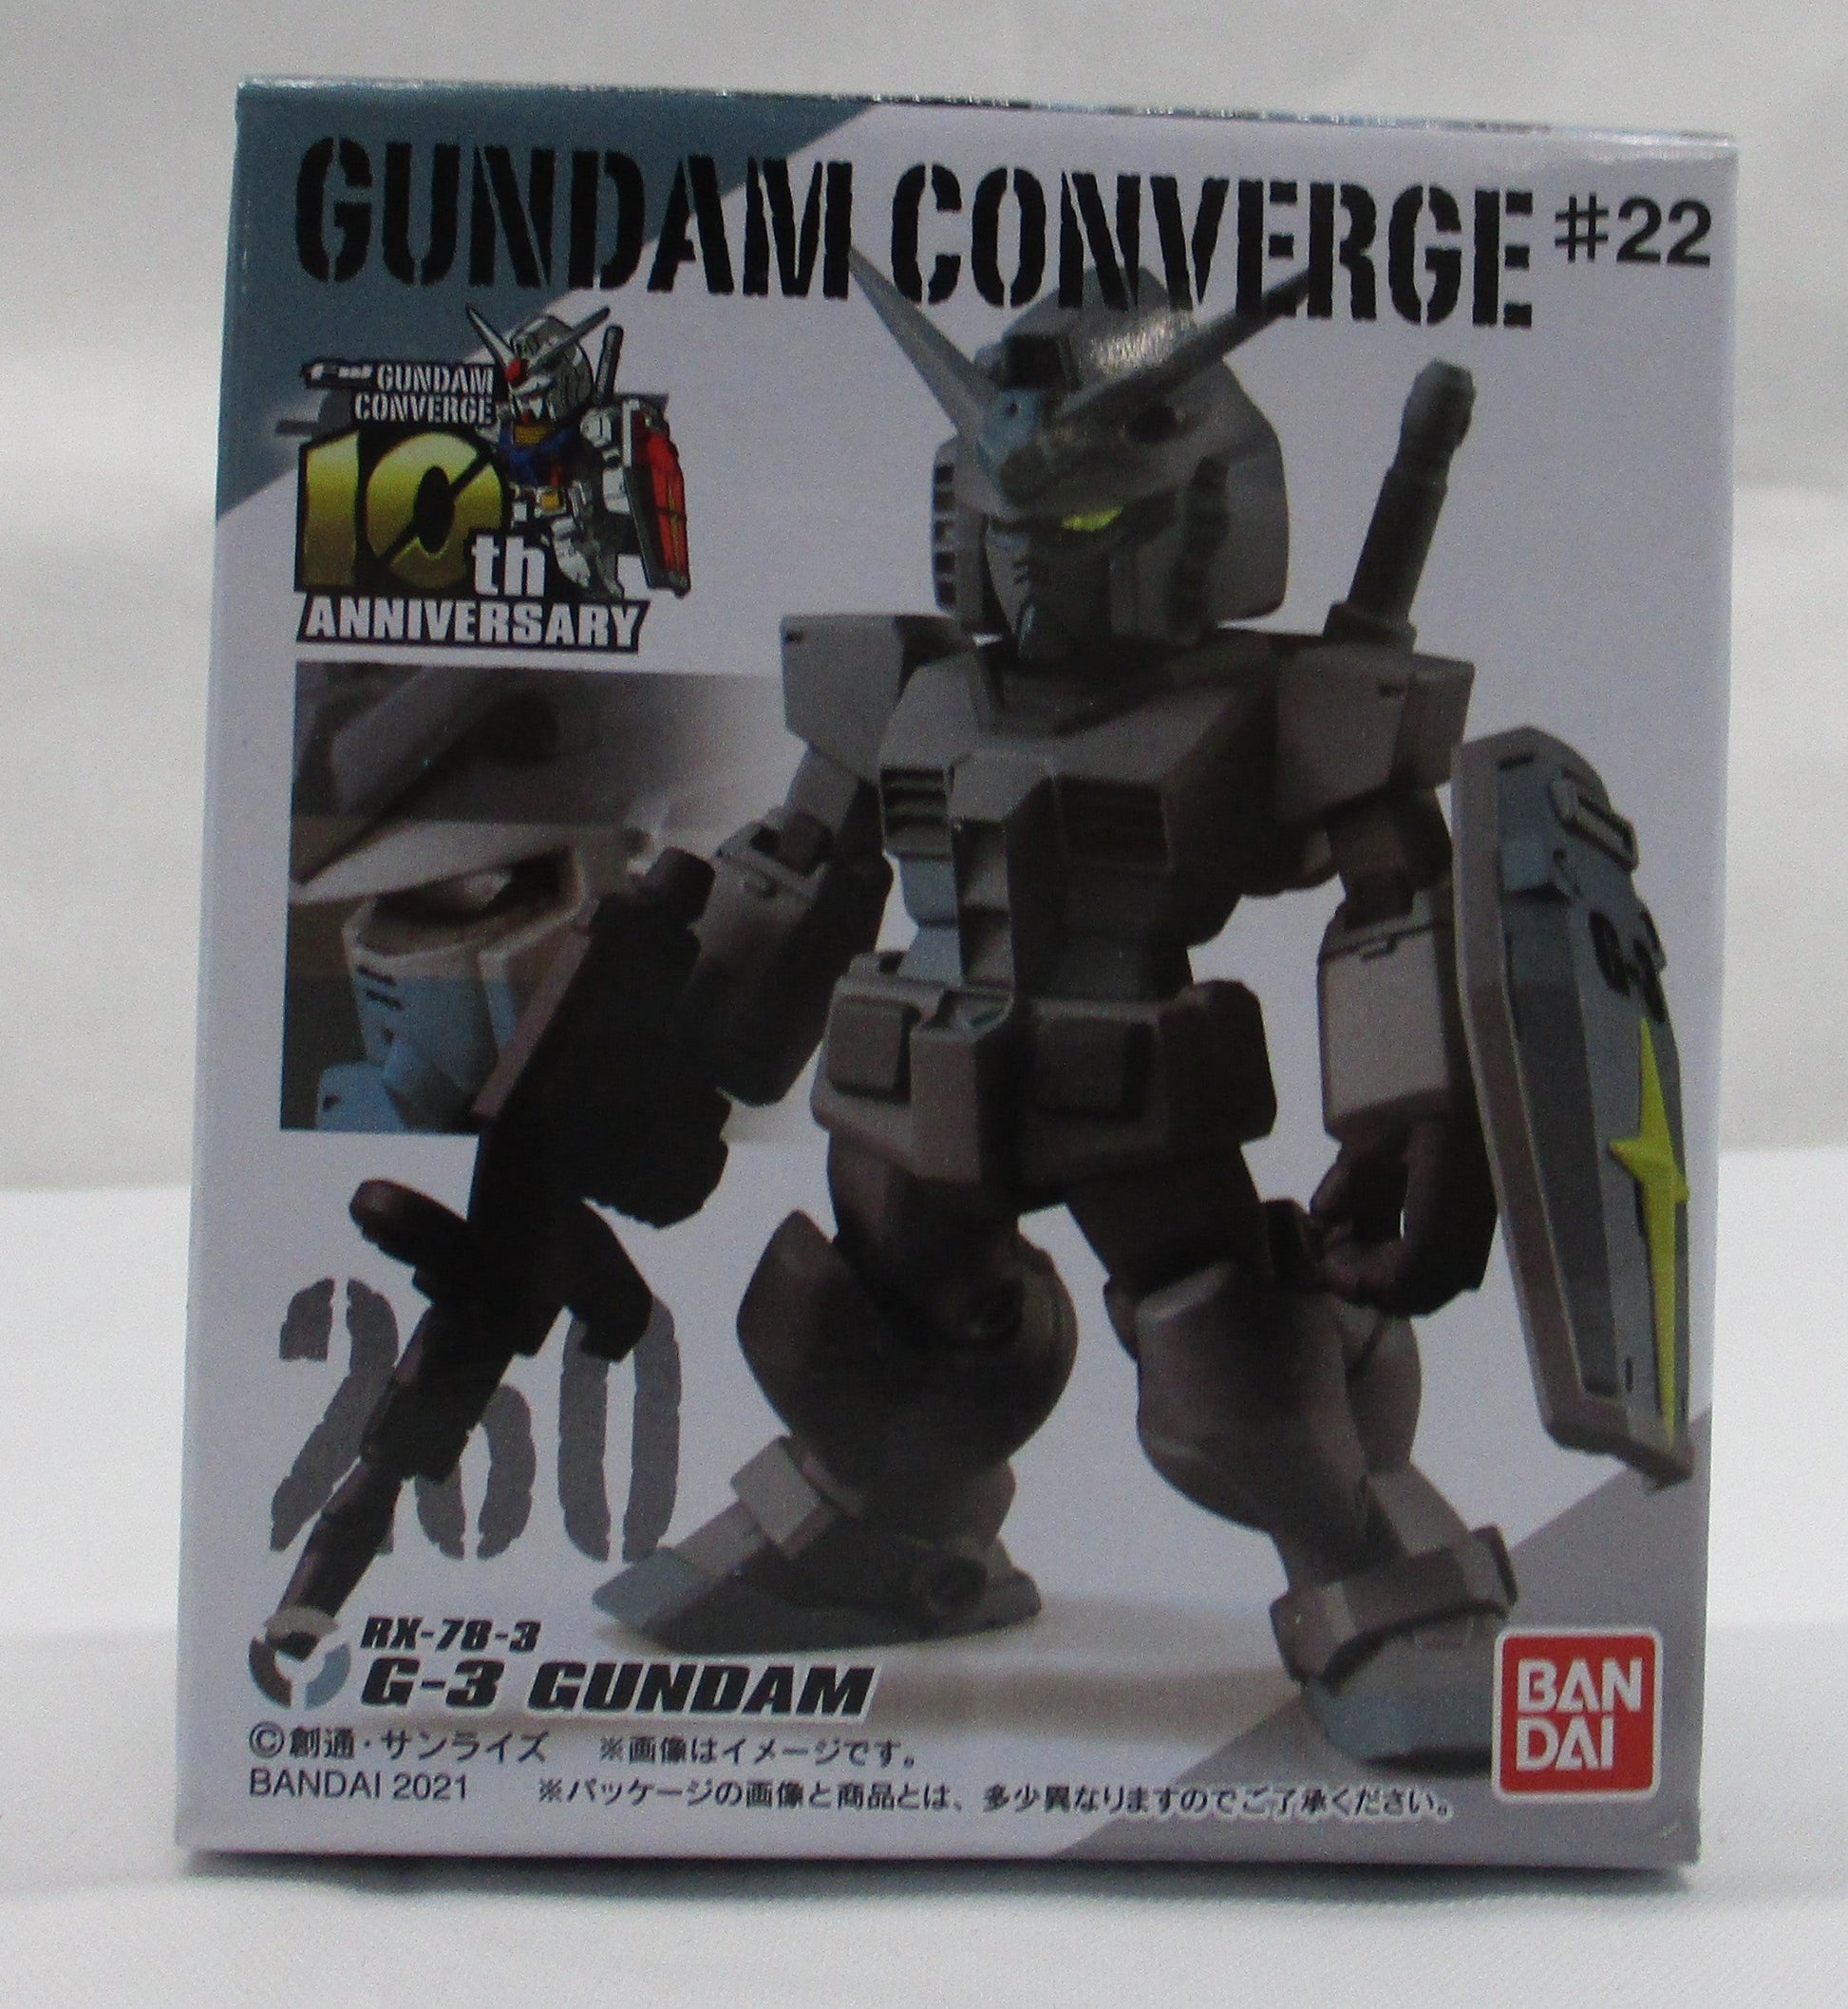 FW Gundam Converge #22 260 G-3 Gundam